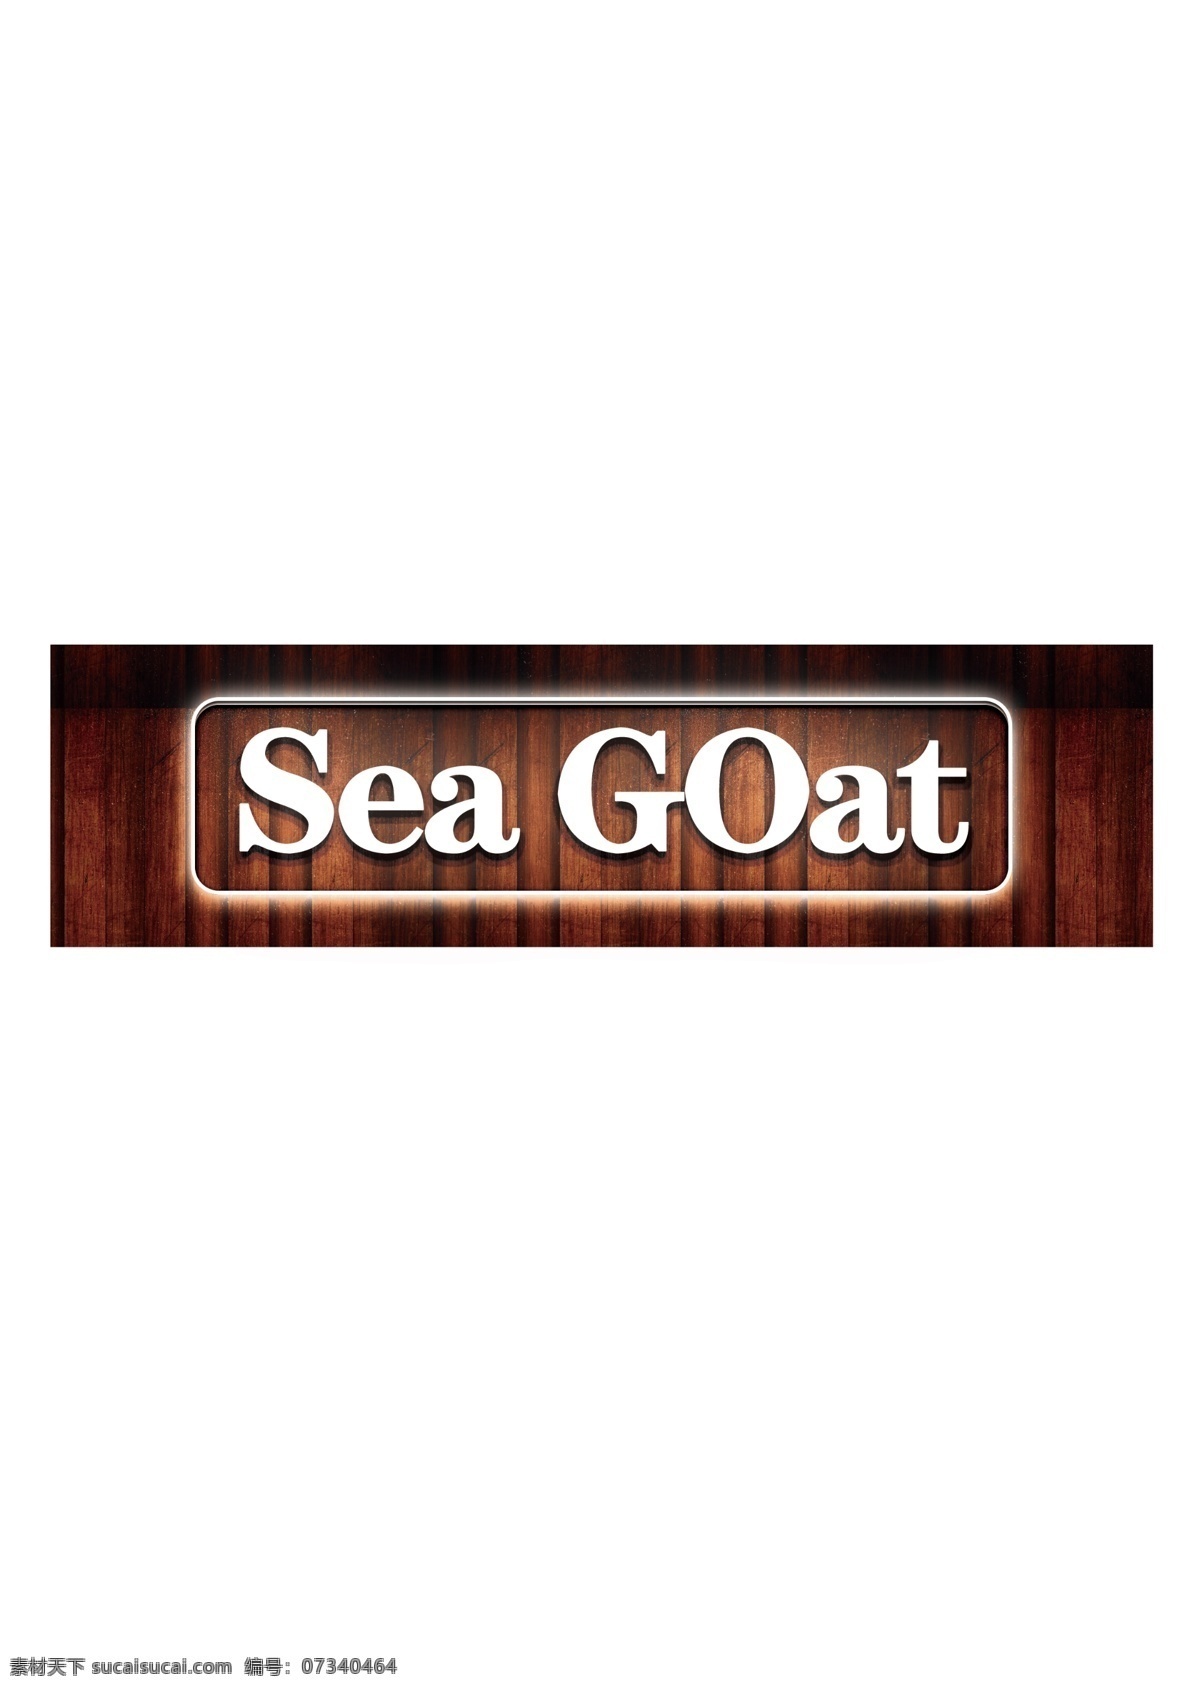 sea goat 发光 字 发光字 晚上 霓虹灯 白色光 摩羯座 logo 灯光 经典高尚 分层